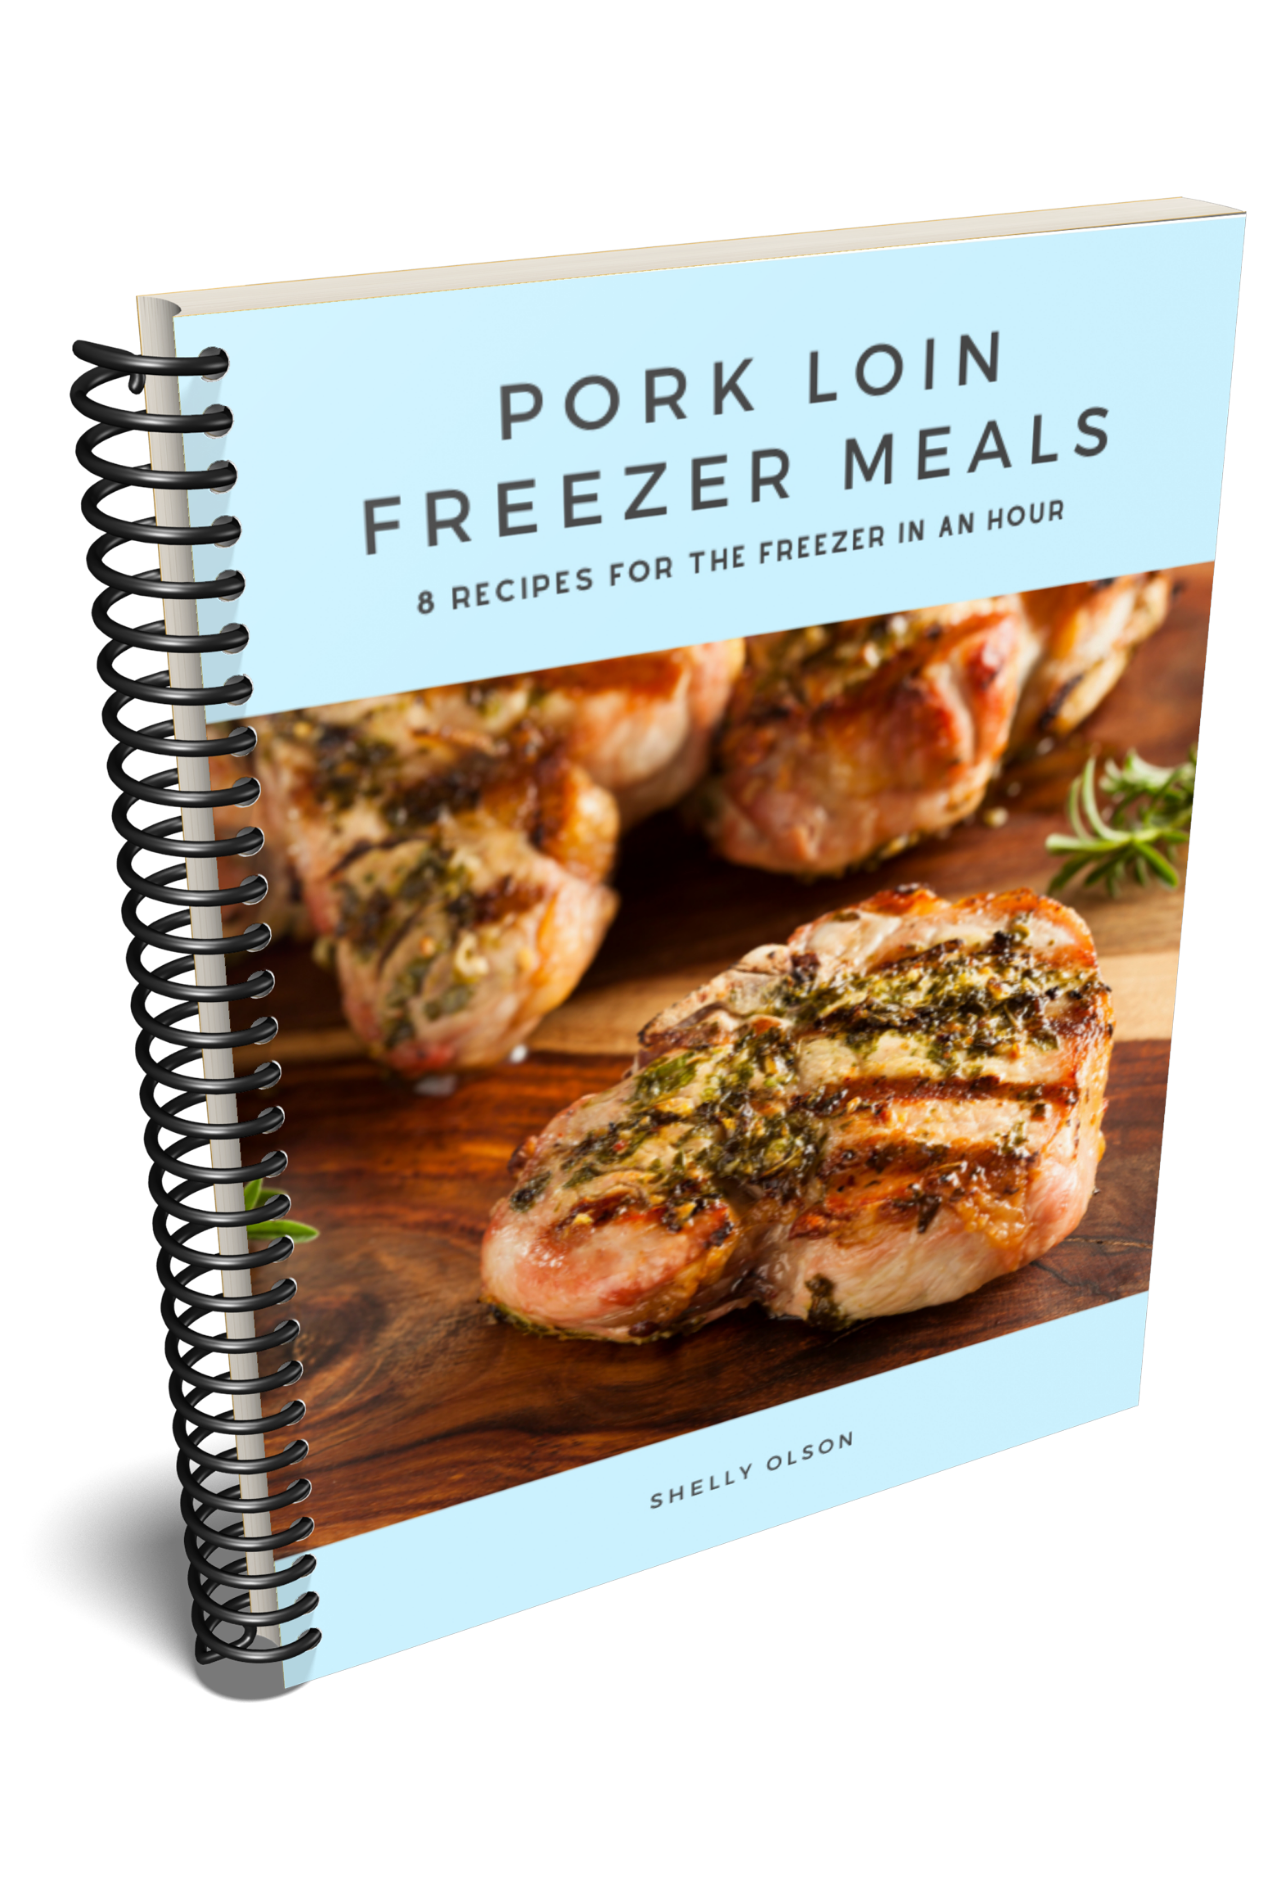 Get the pork loin freezer cookbook.